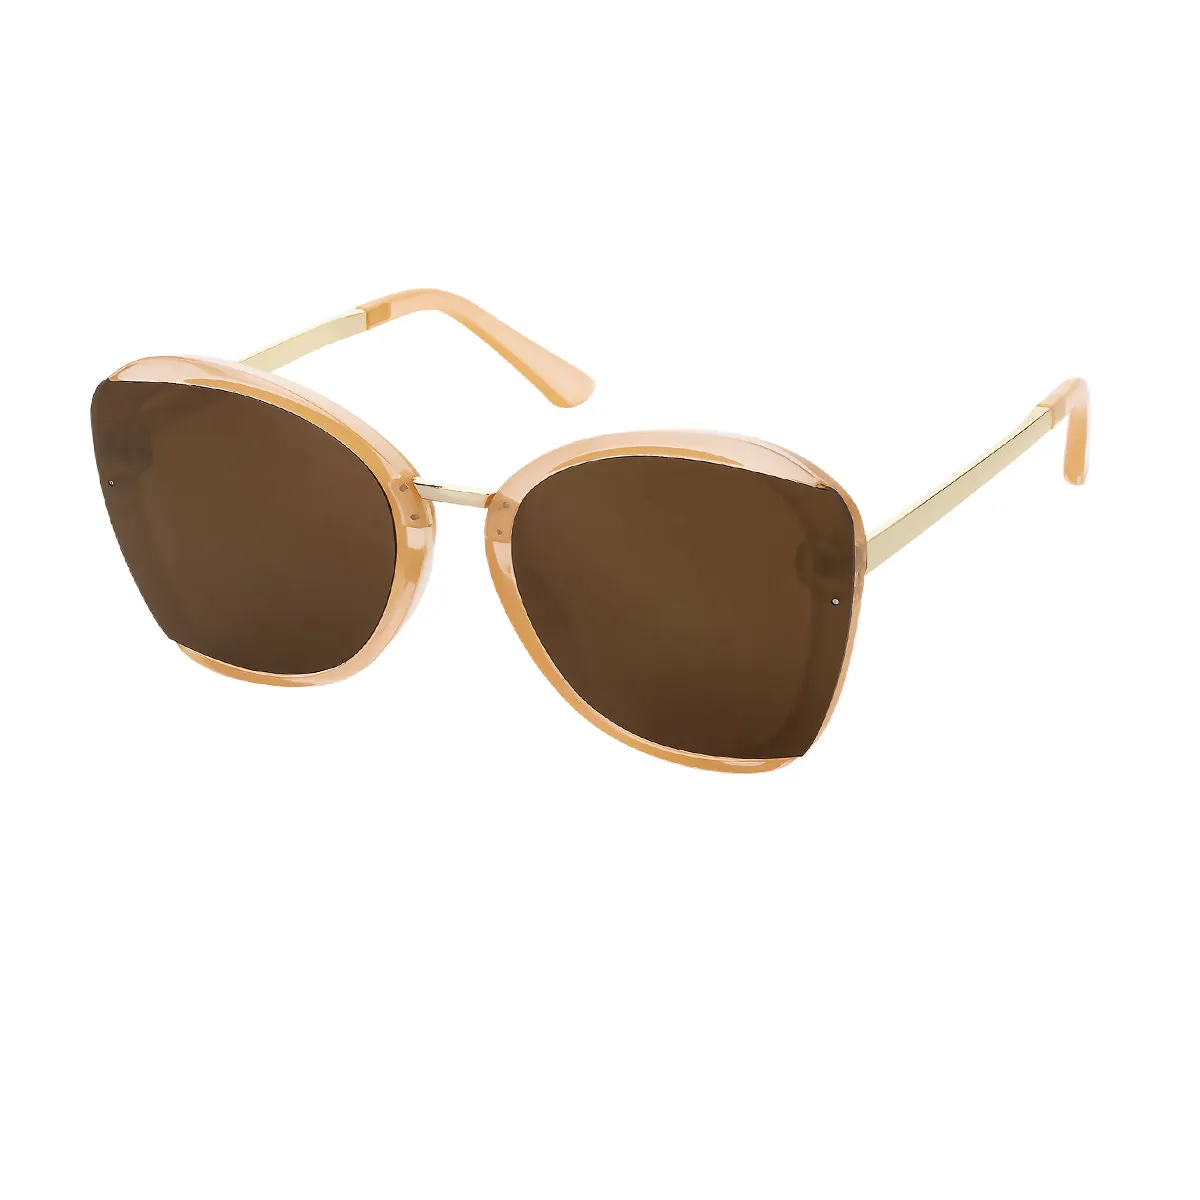 Mara - Oval Orange Sunglasses for Women